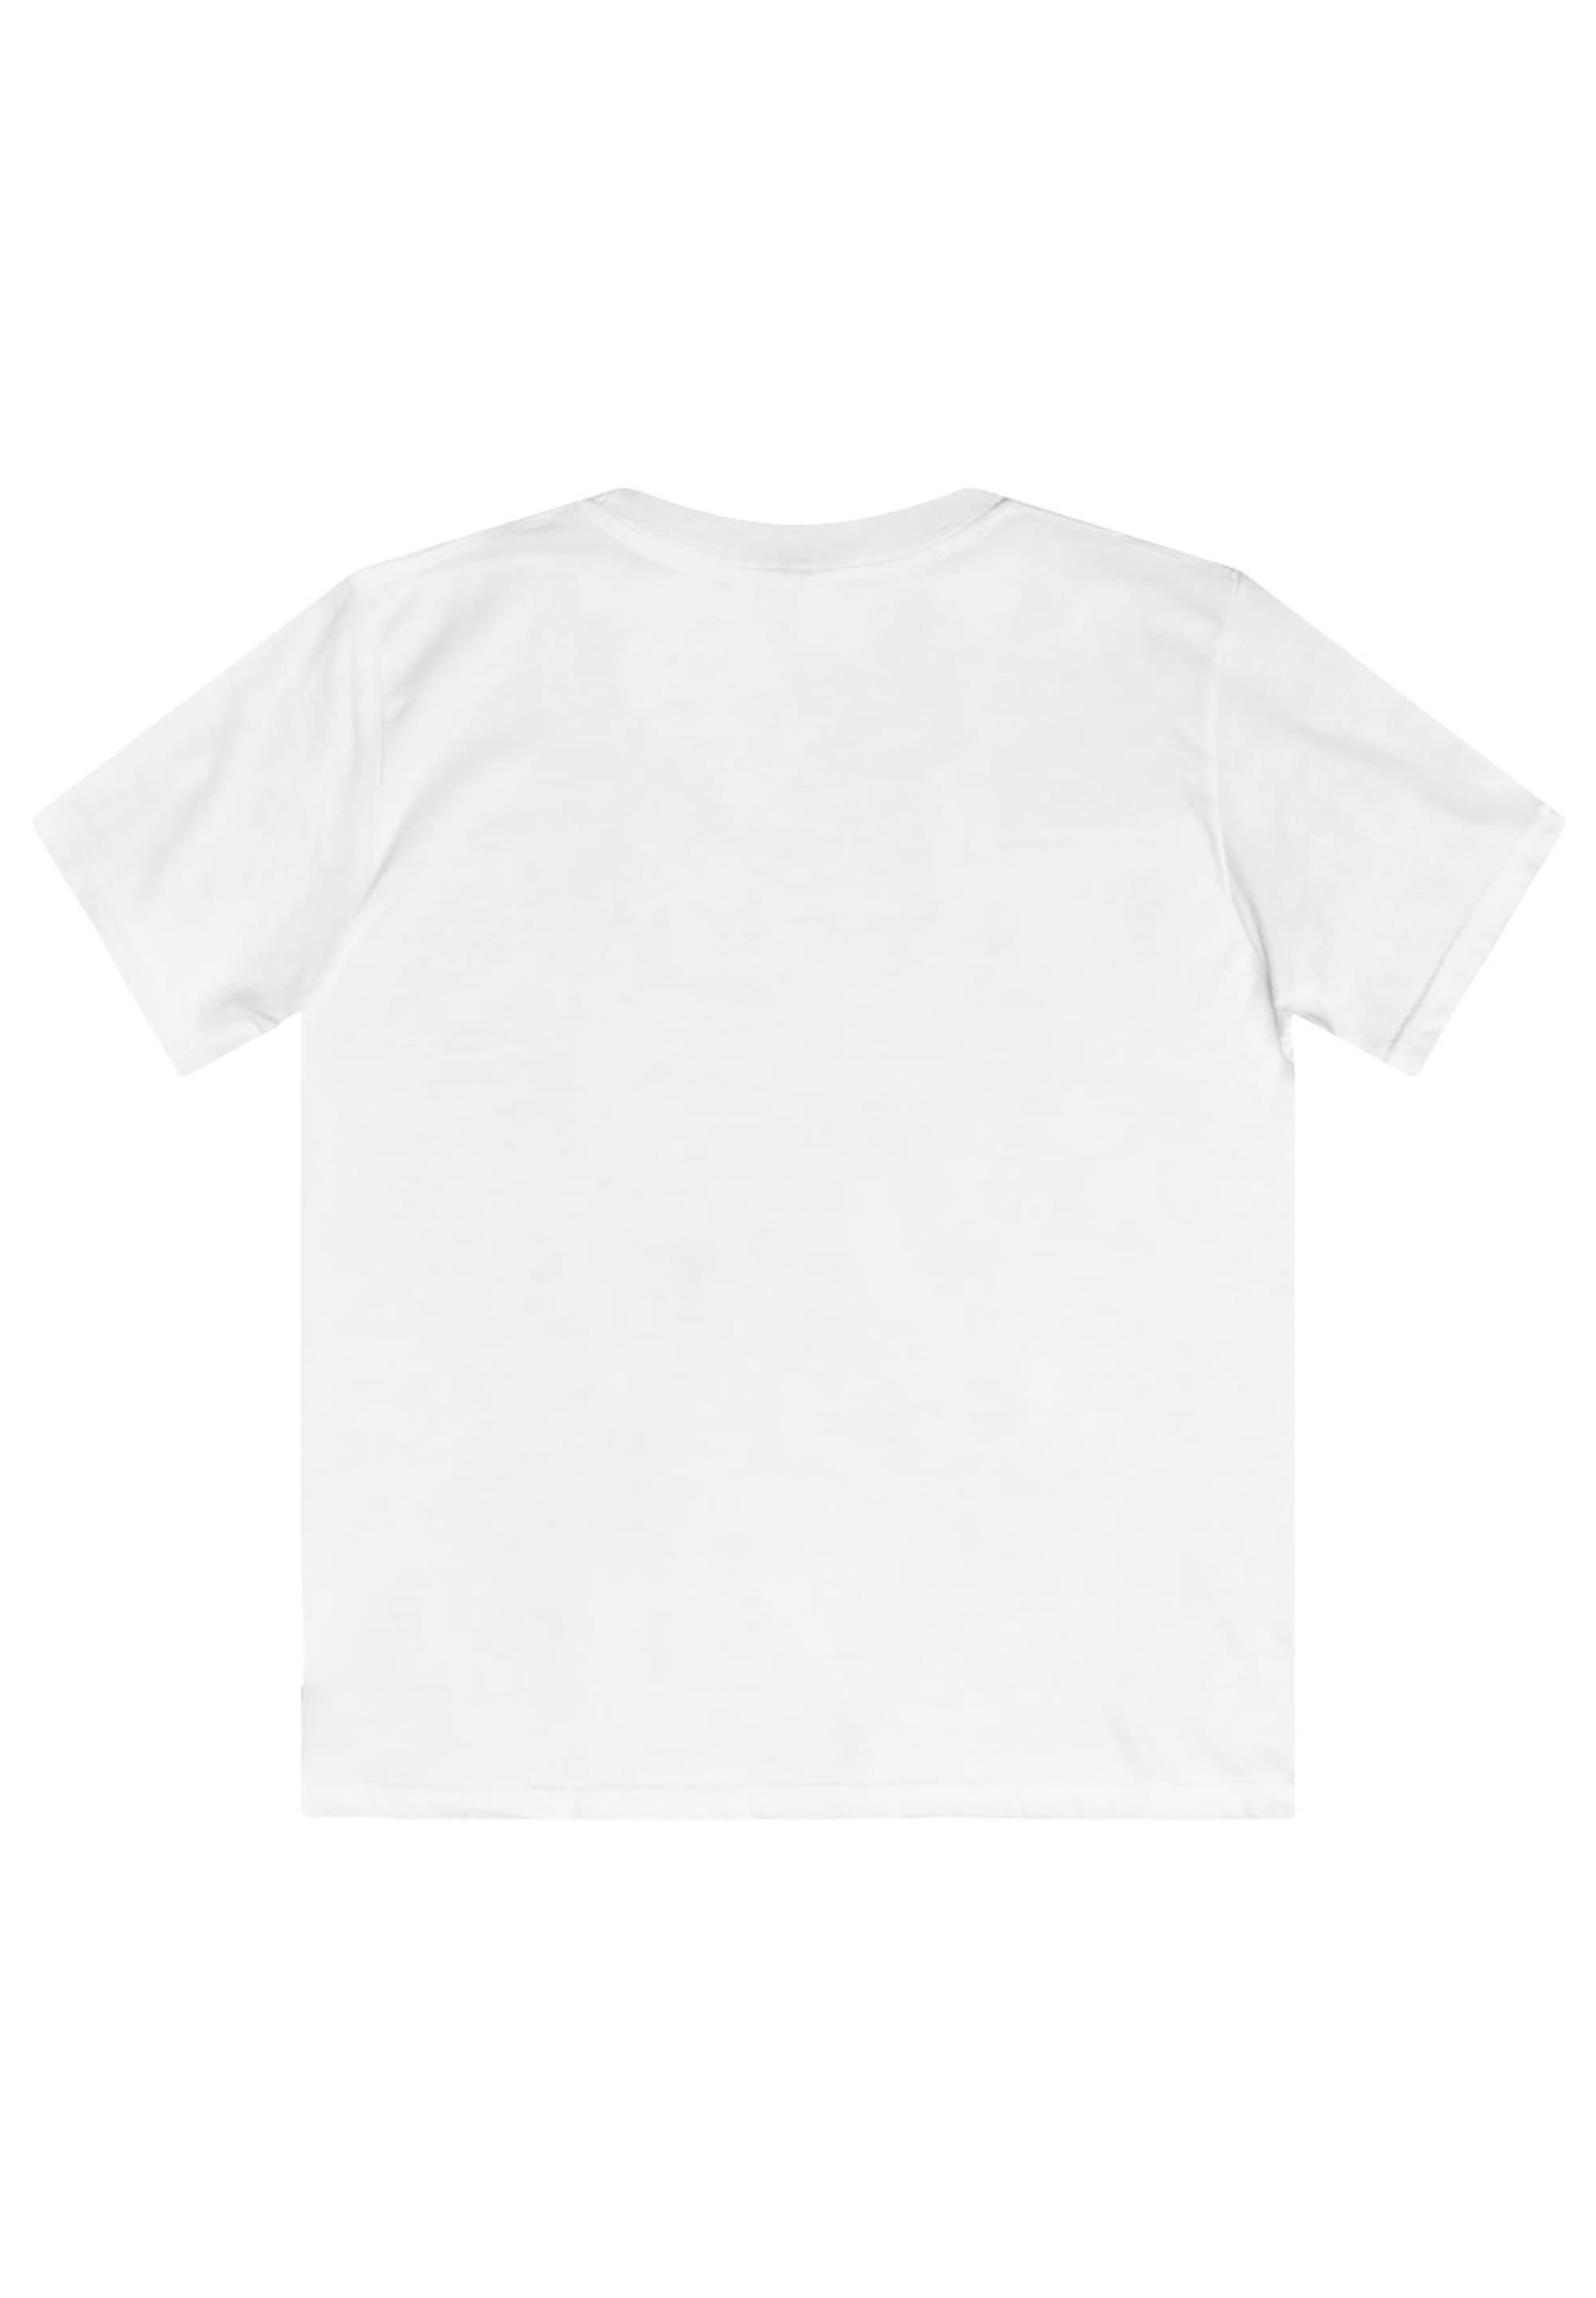 Floyd Summer«, F4NT4STIC bestellen Print BAUR | »Pink T-Shirt online Dream Julia